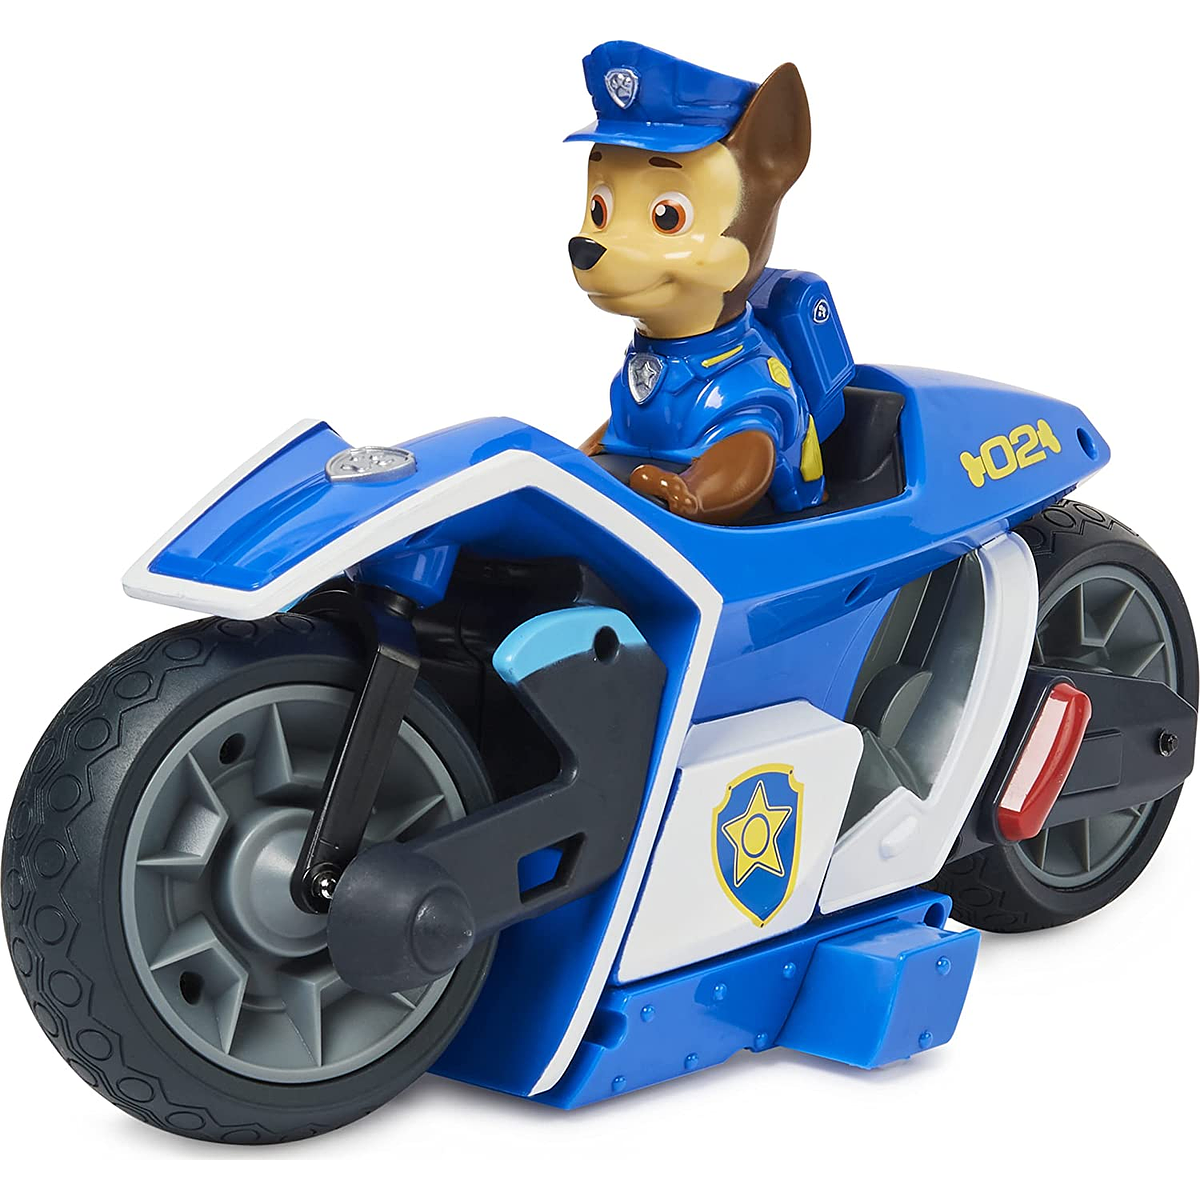 ‍Patrulla Canina Juguete de Chase al Rescate con la Moto Policial